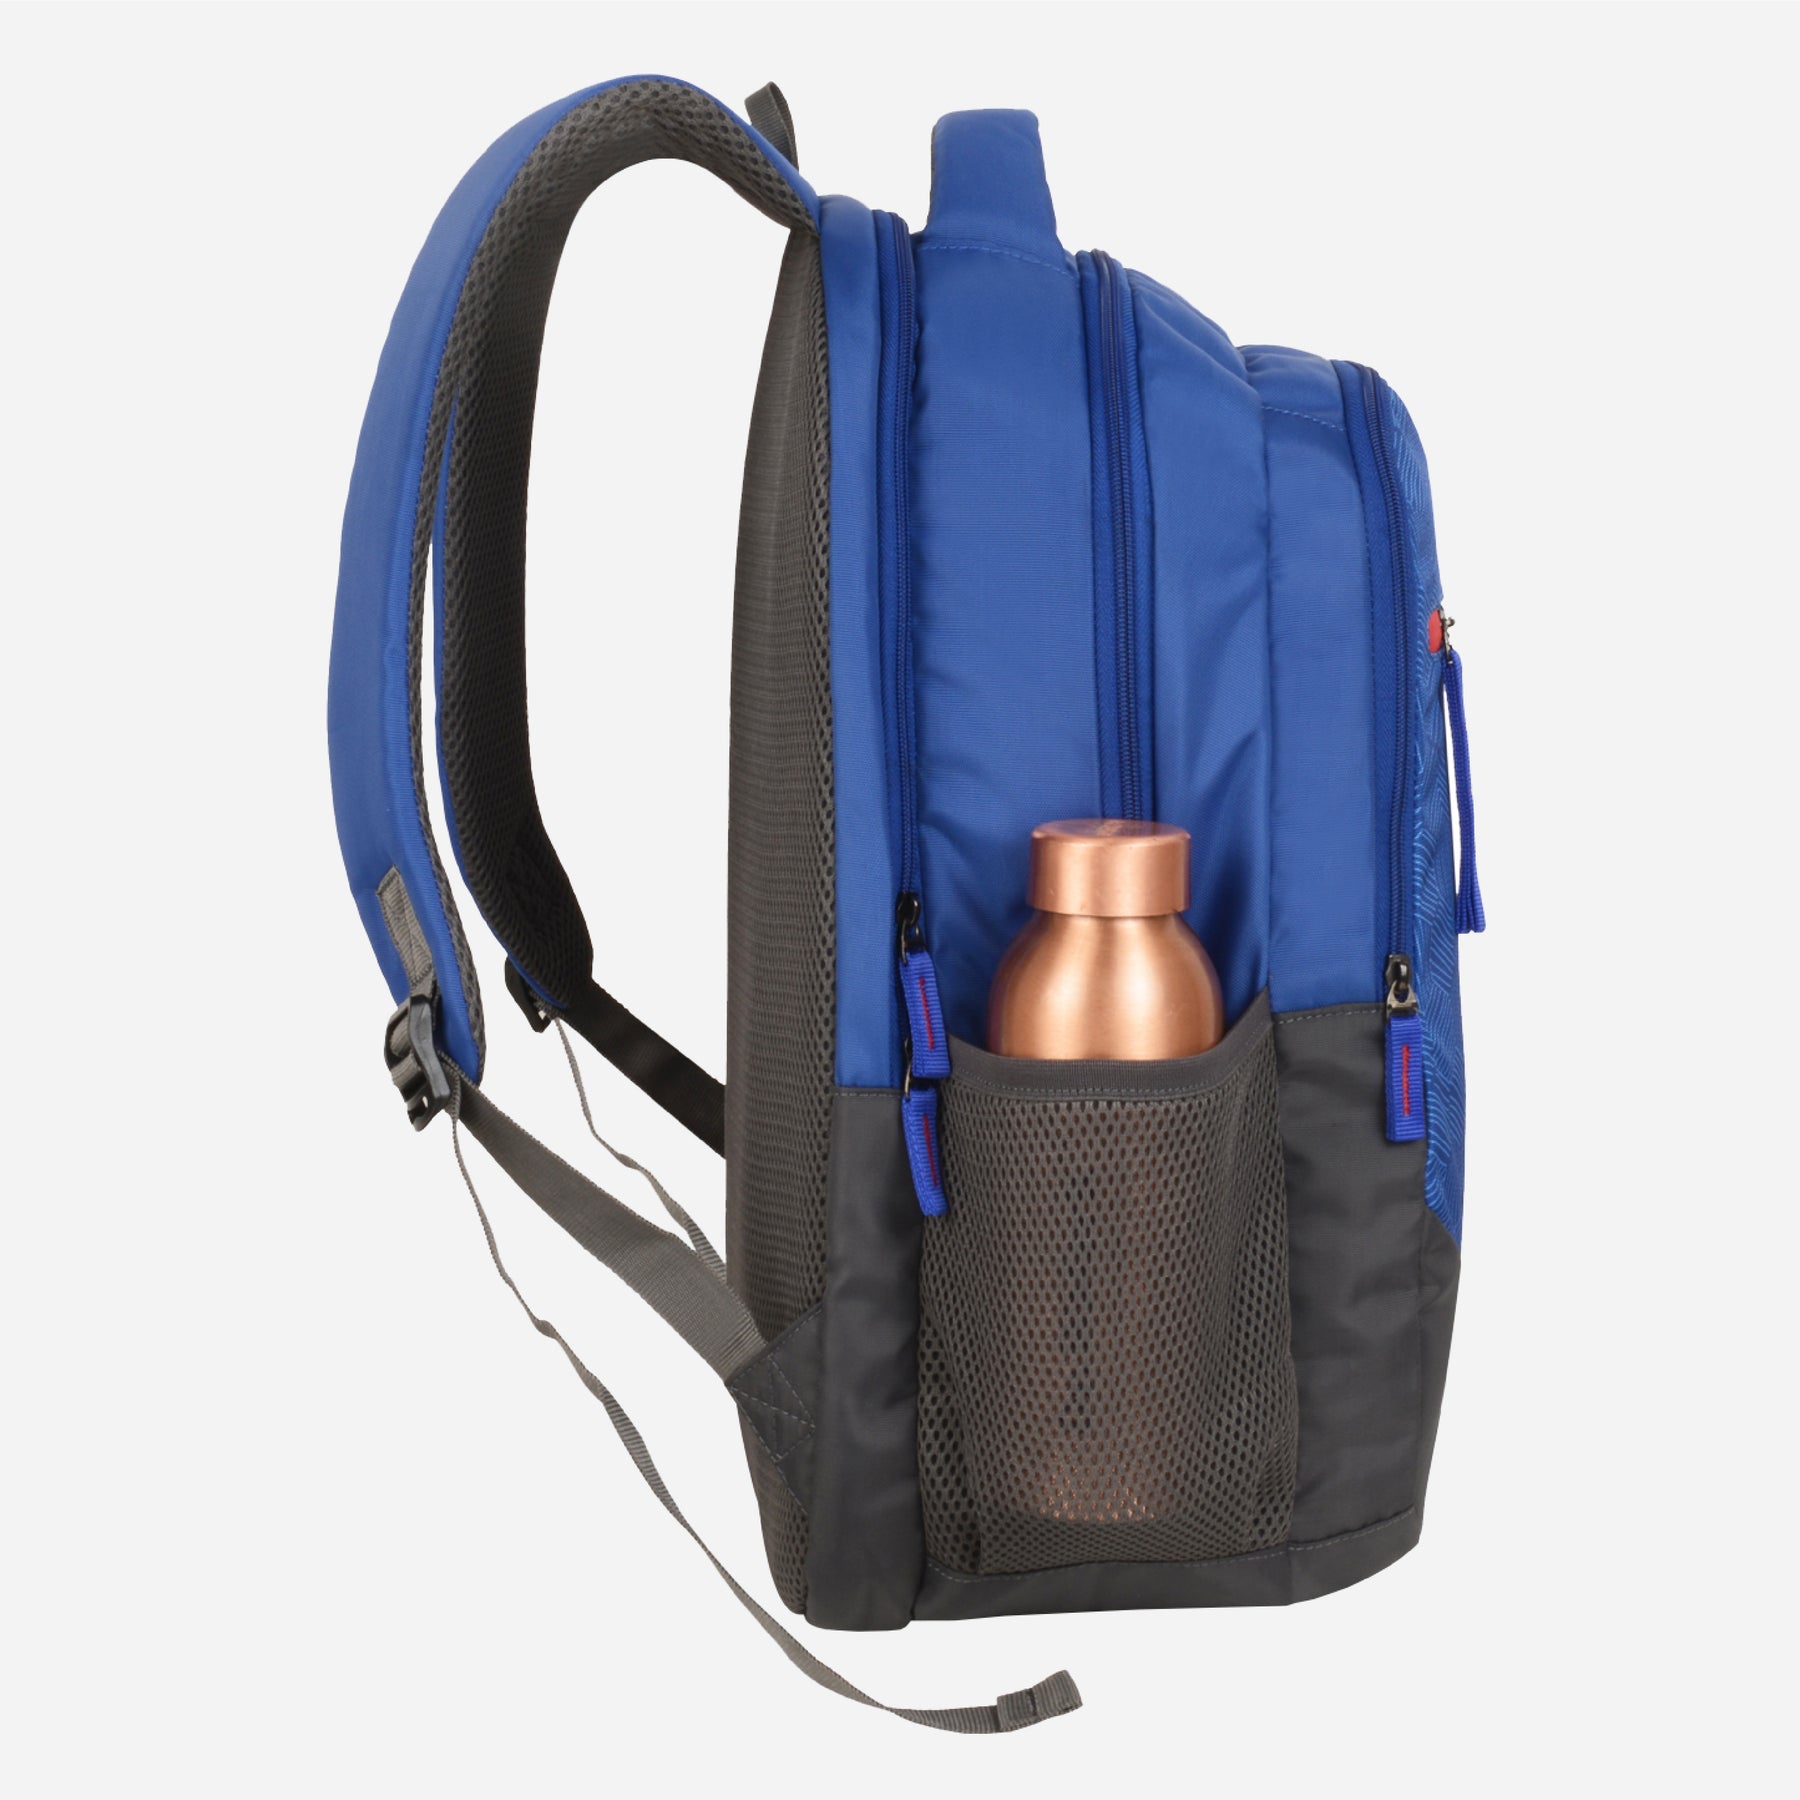 Tribe Laptop Backpack - Blue